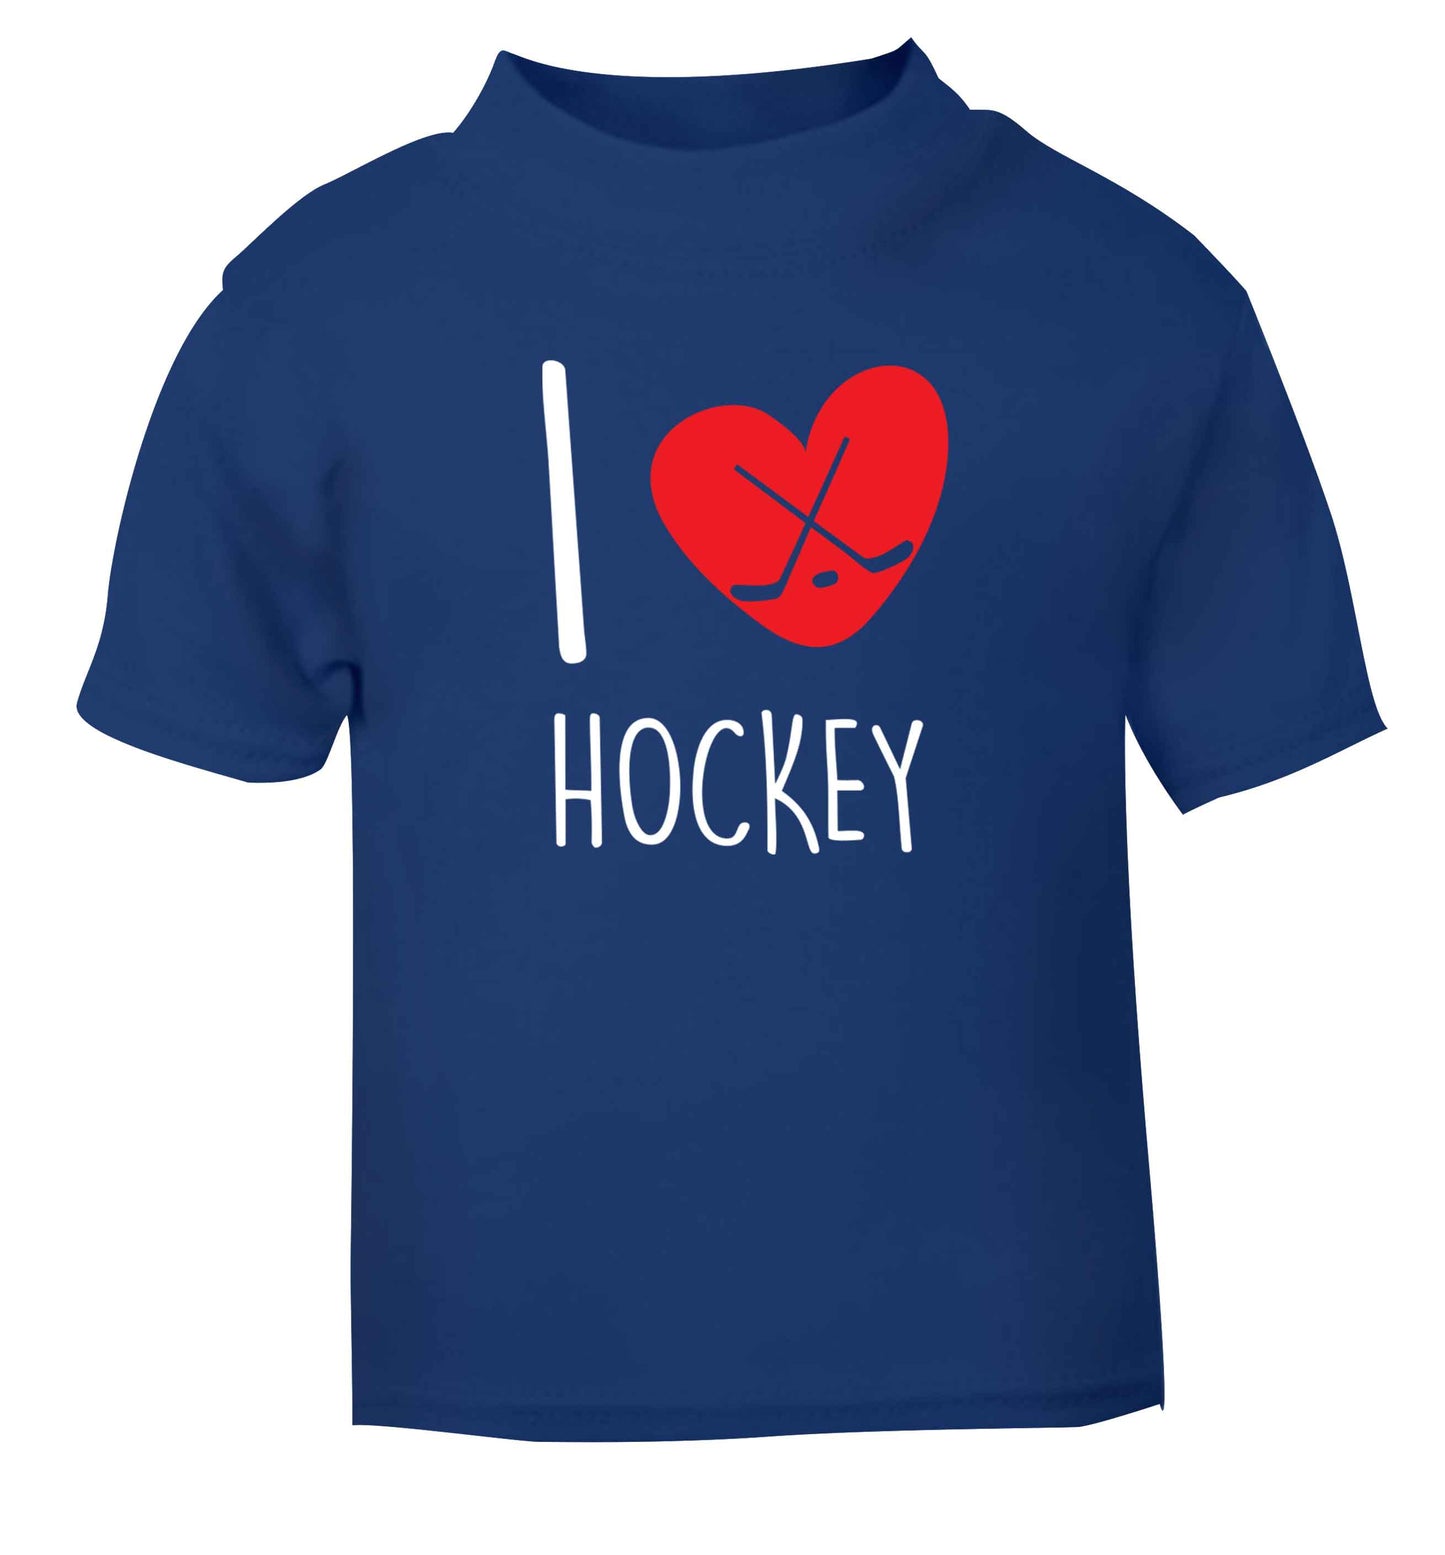 I love hockey blue Baby Toddler Tshirt 2 Years